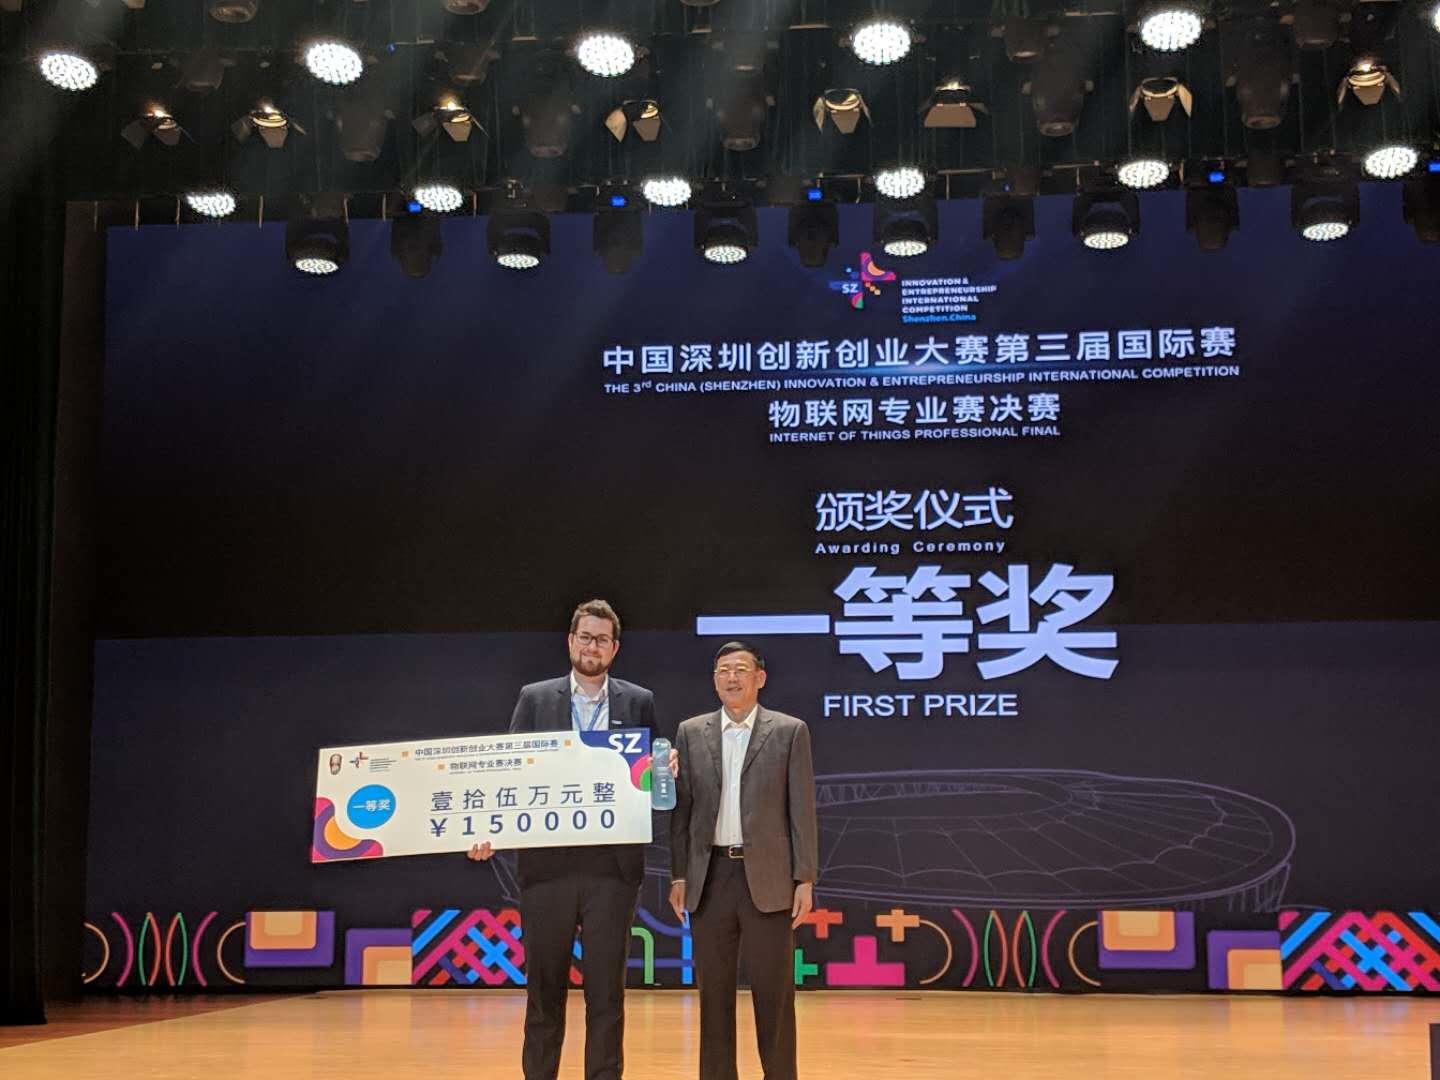 Nicholas Burgwin receives award for Fibos at the 3rd China (Shenzhen) Innovation & Entrepreneurship International Competitio